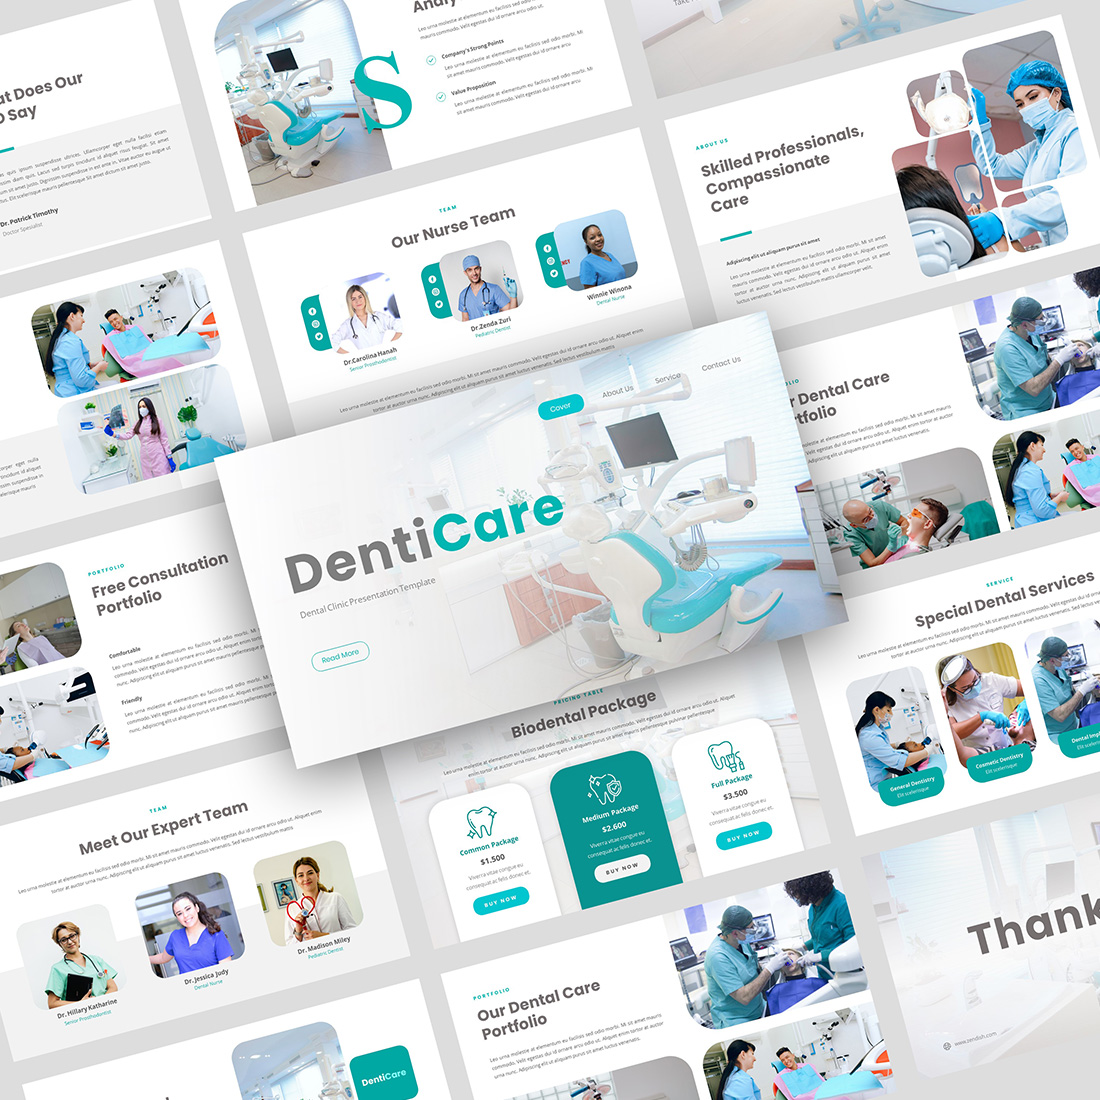 DentiCare-Dental Clinic Keynote Template cover image.